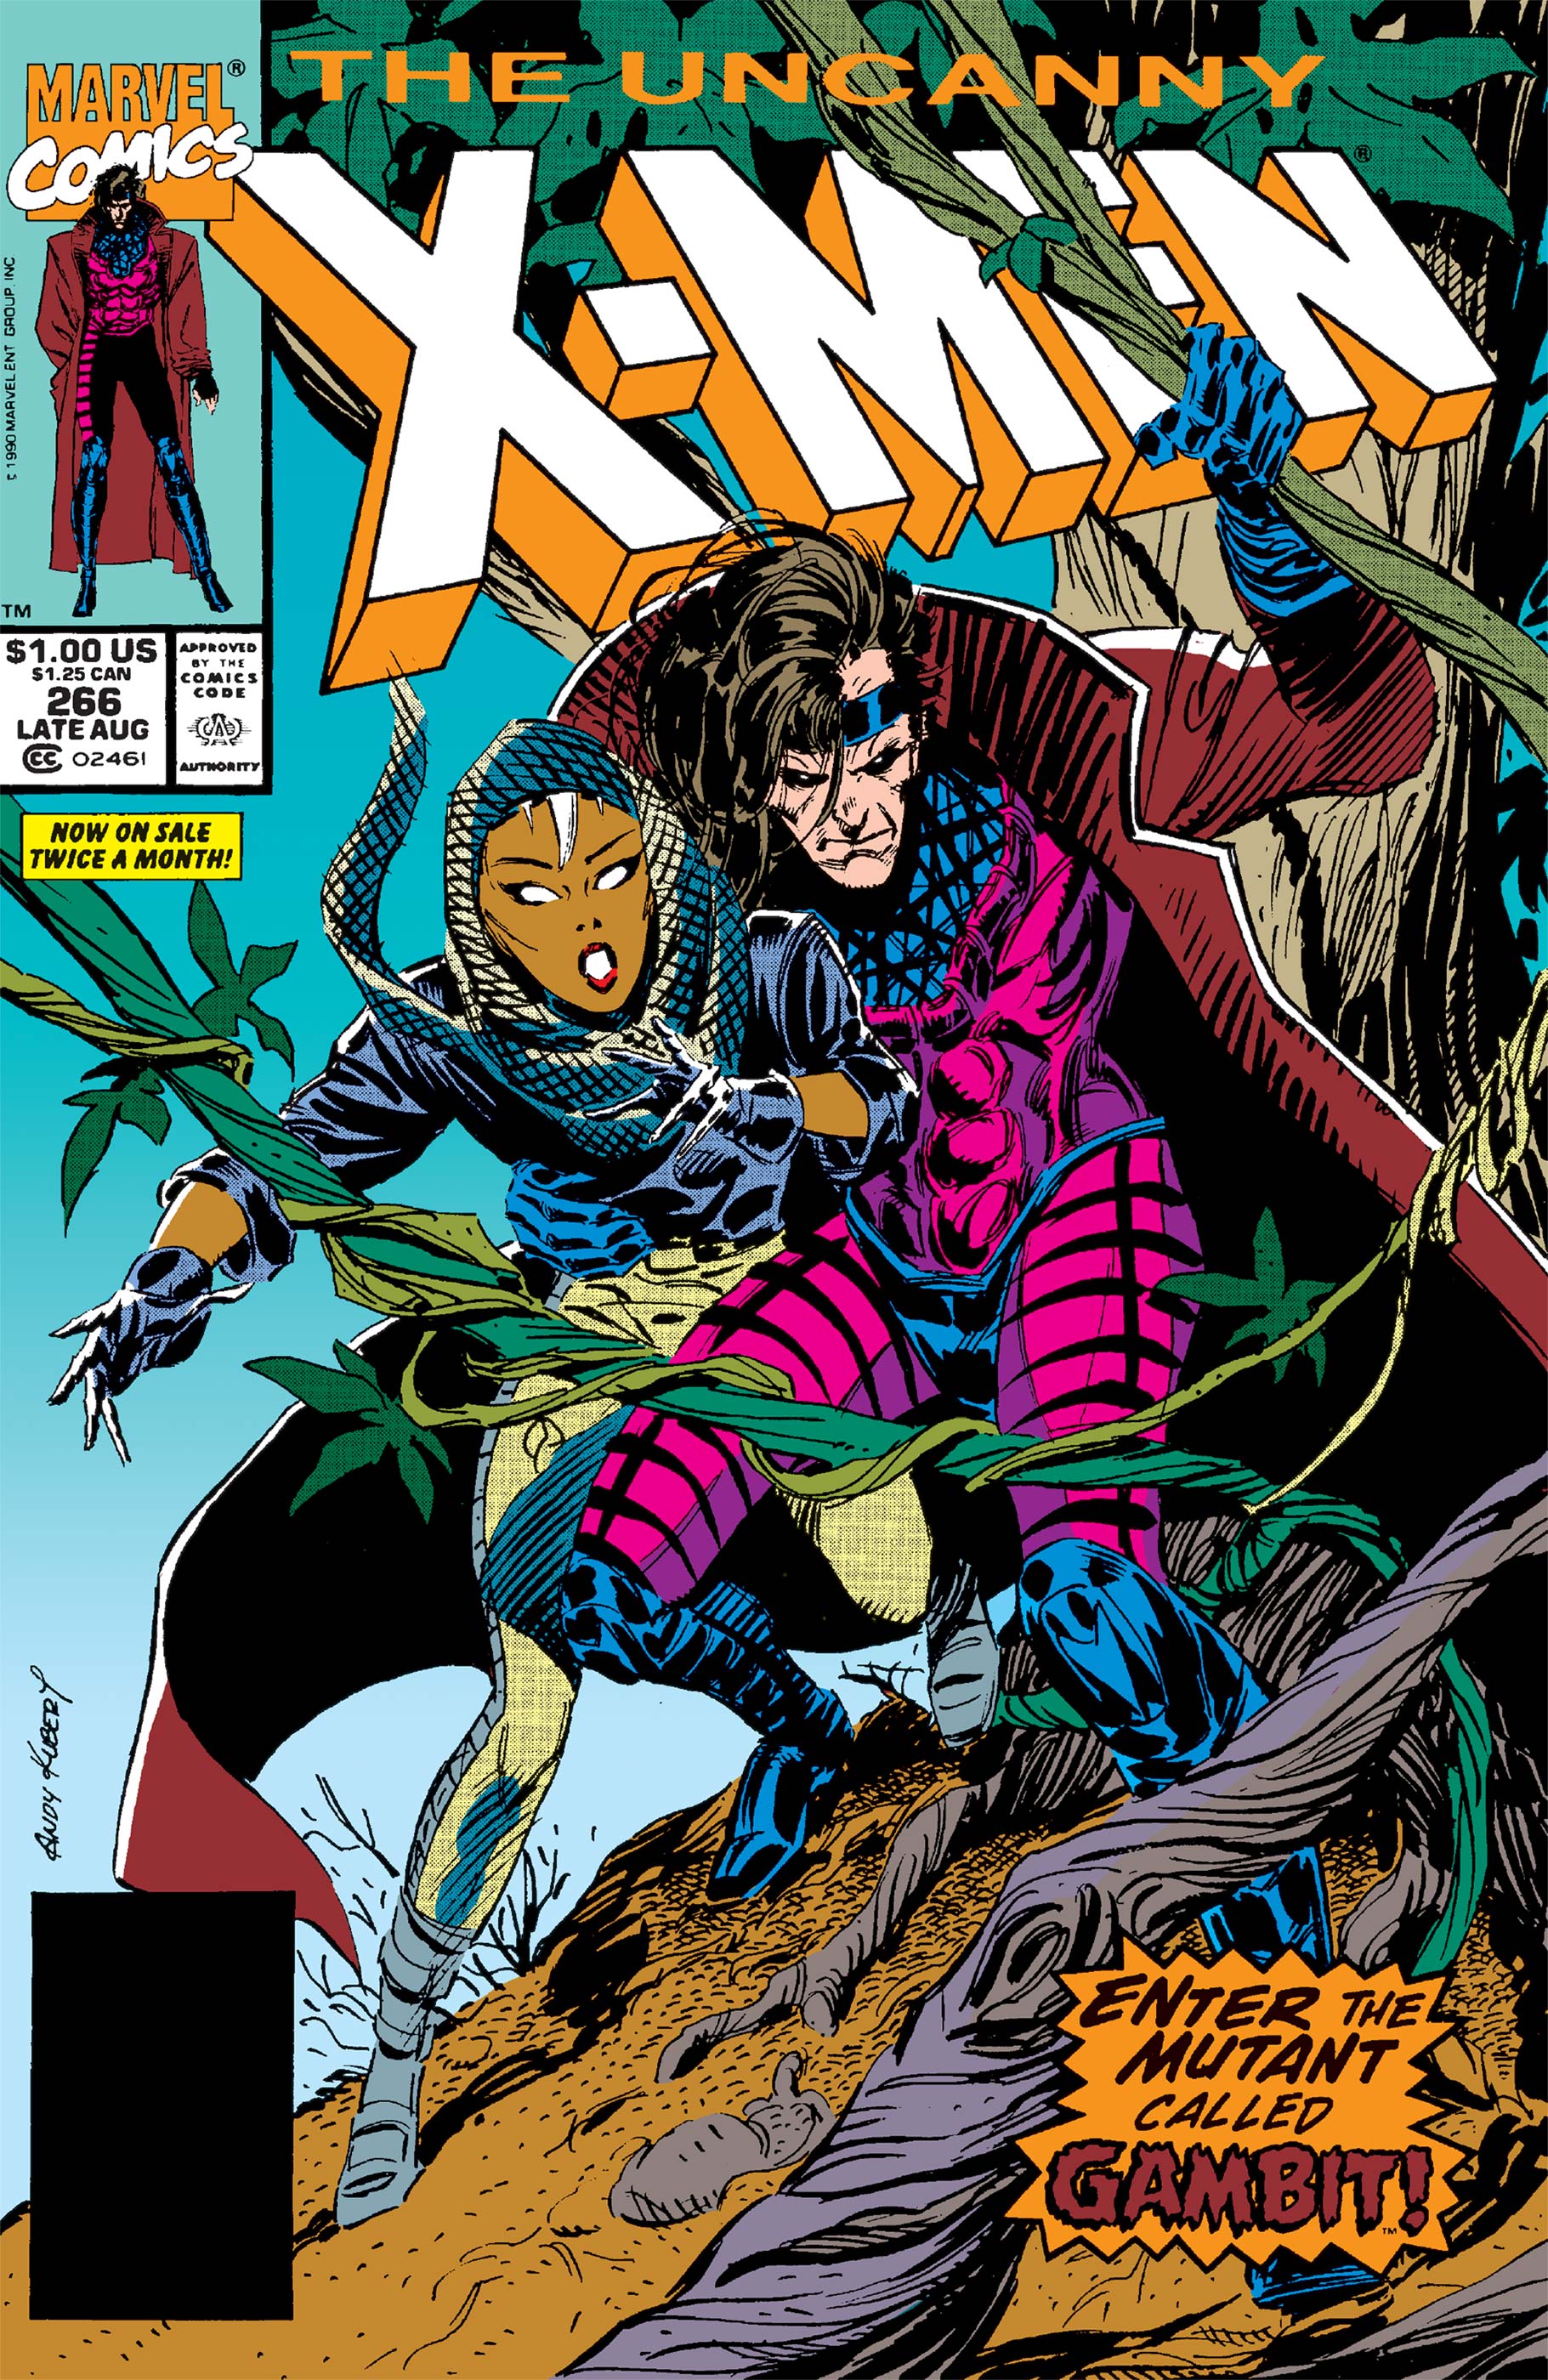 Marvel Comics The Uncanny X-Men issue #266